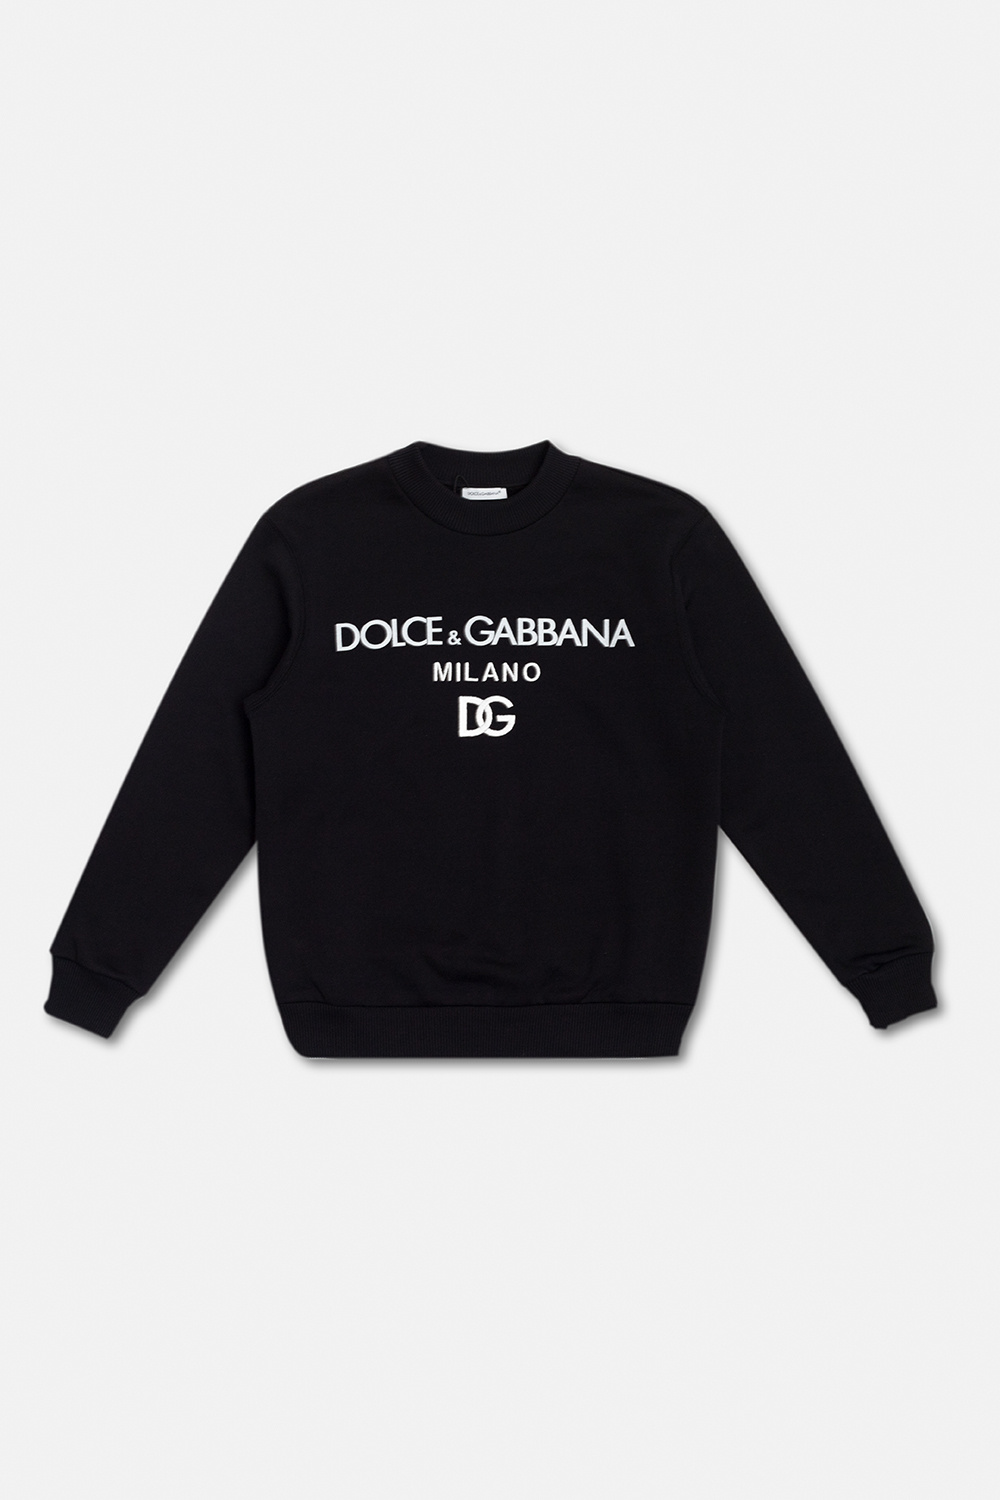 dolce leopard & Gabbana Kids Sweatshirt with logo